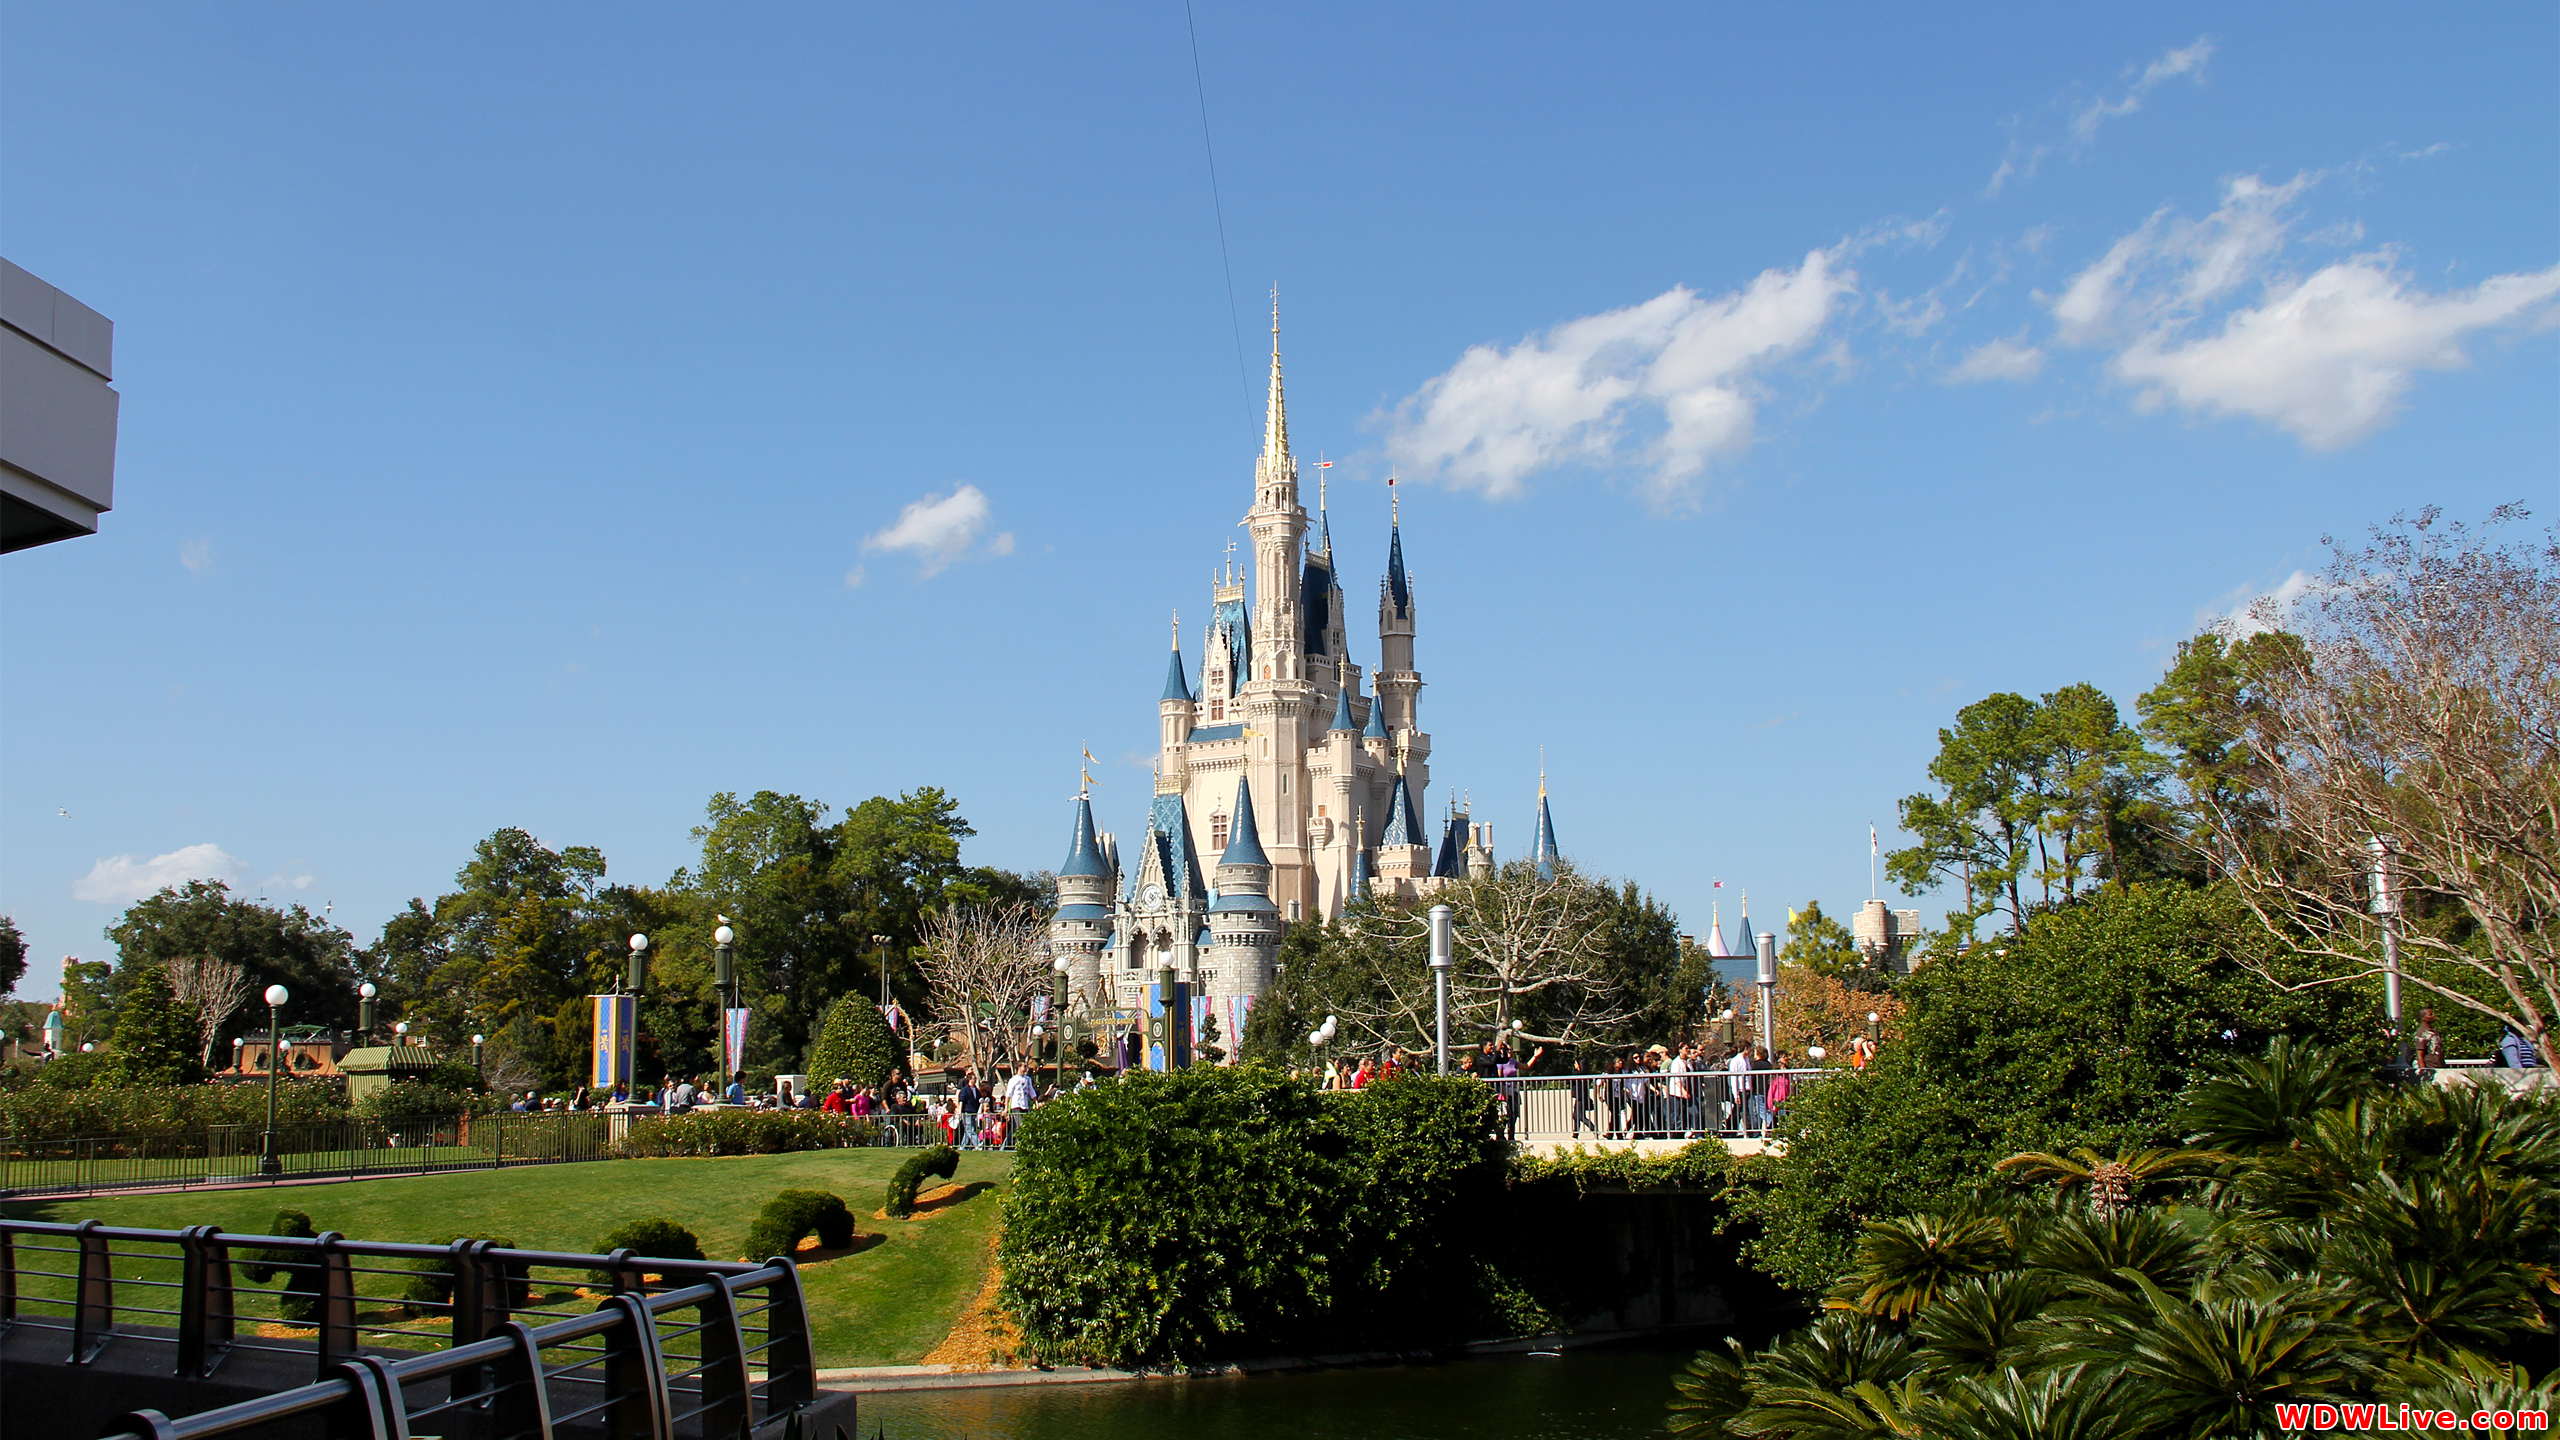 Cinderella Castle: A beautiful day in the Magic Kingdom!